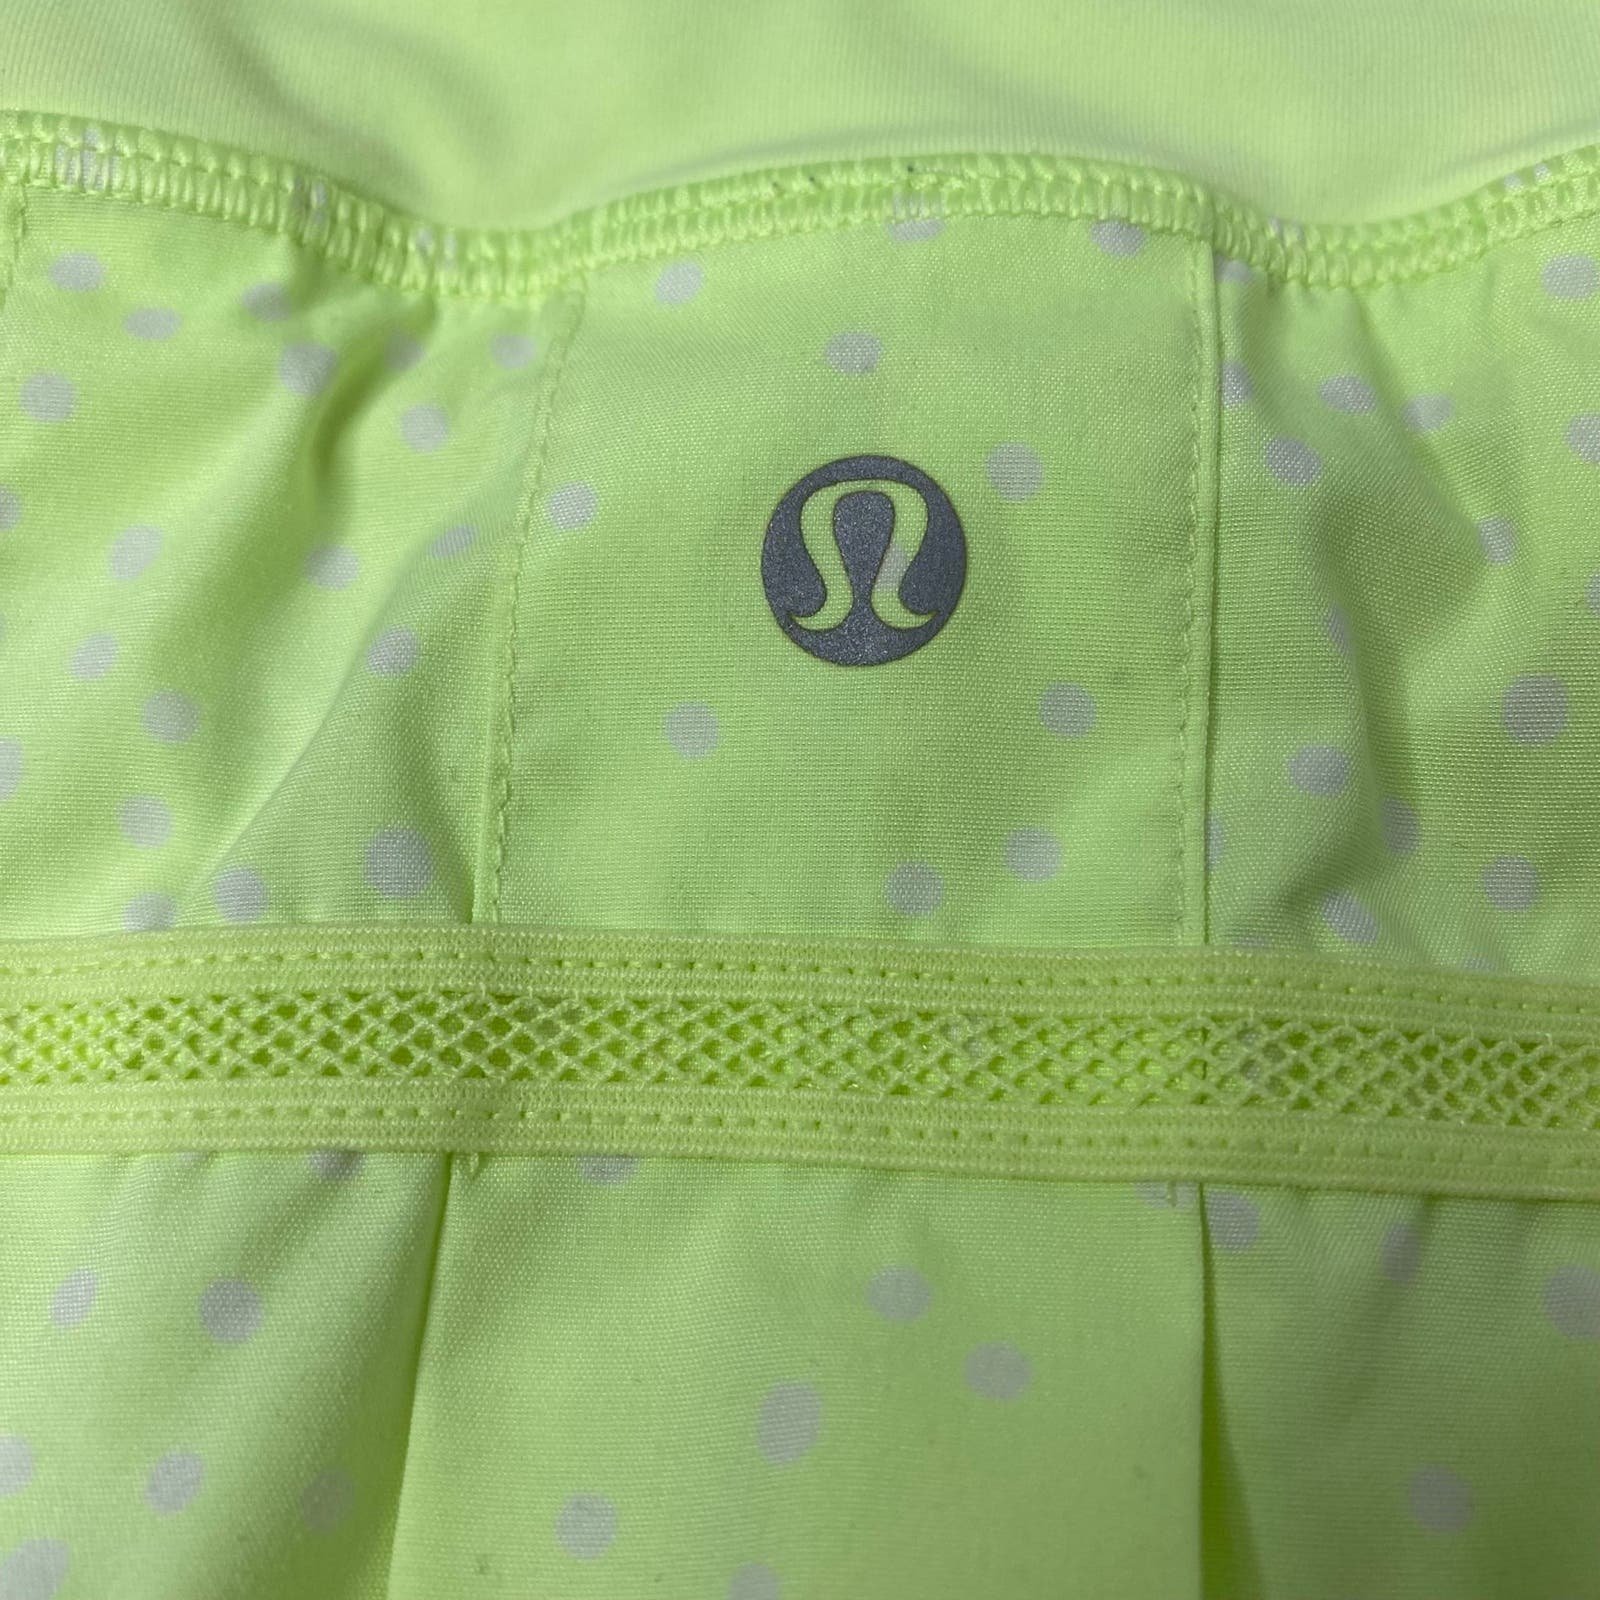 Authentic Lululemon Pace Setter Skirt Skorts neon Faded Zap Green /yellow Polka Dot ldACHtgWQ US Sale